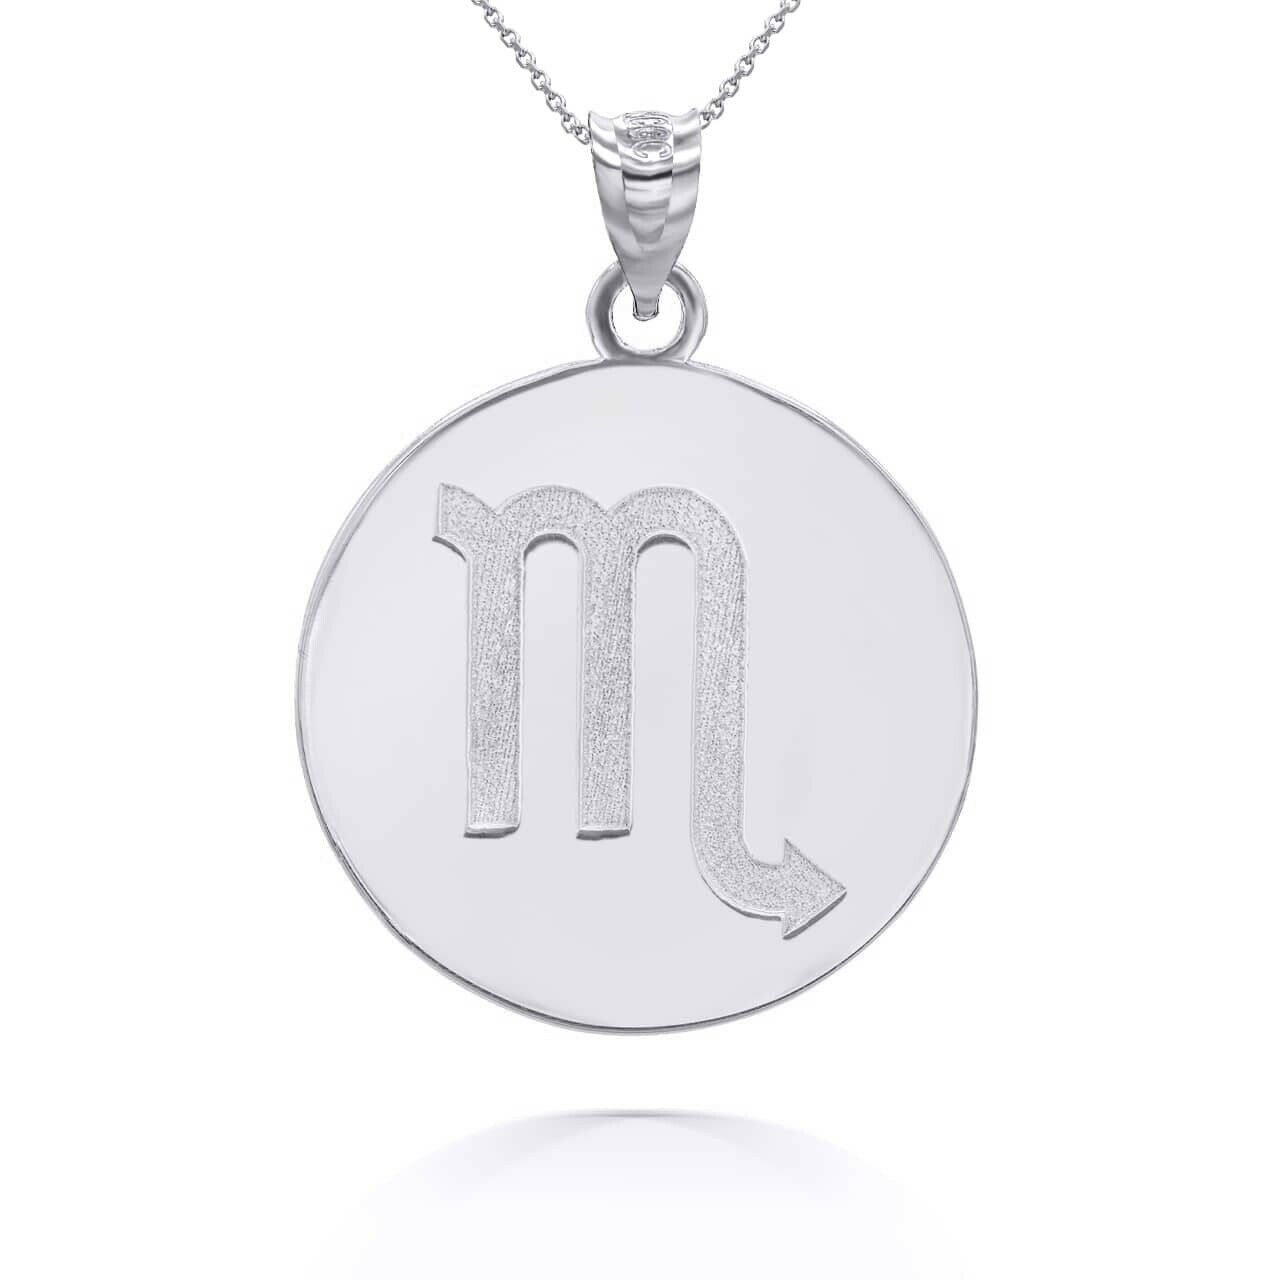 Personalized Engrave Name Zodiac Sign Scorpio Round Silver Pendant Necklace